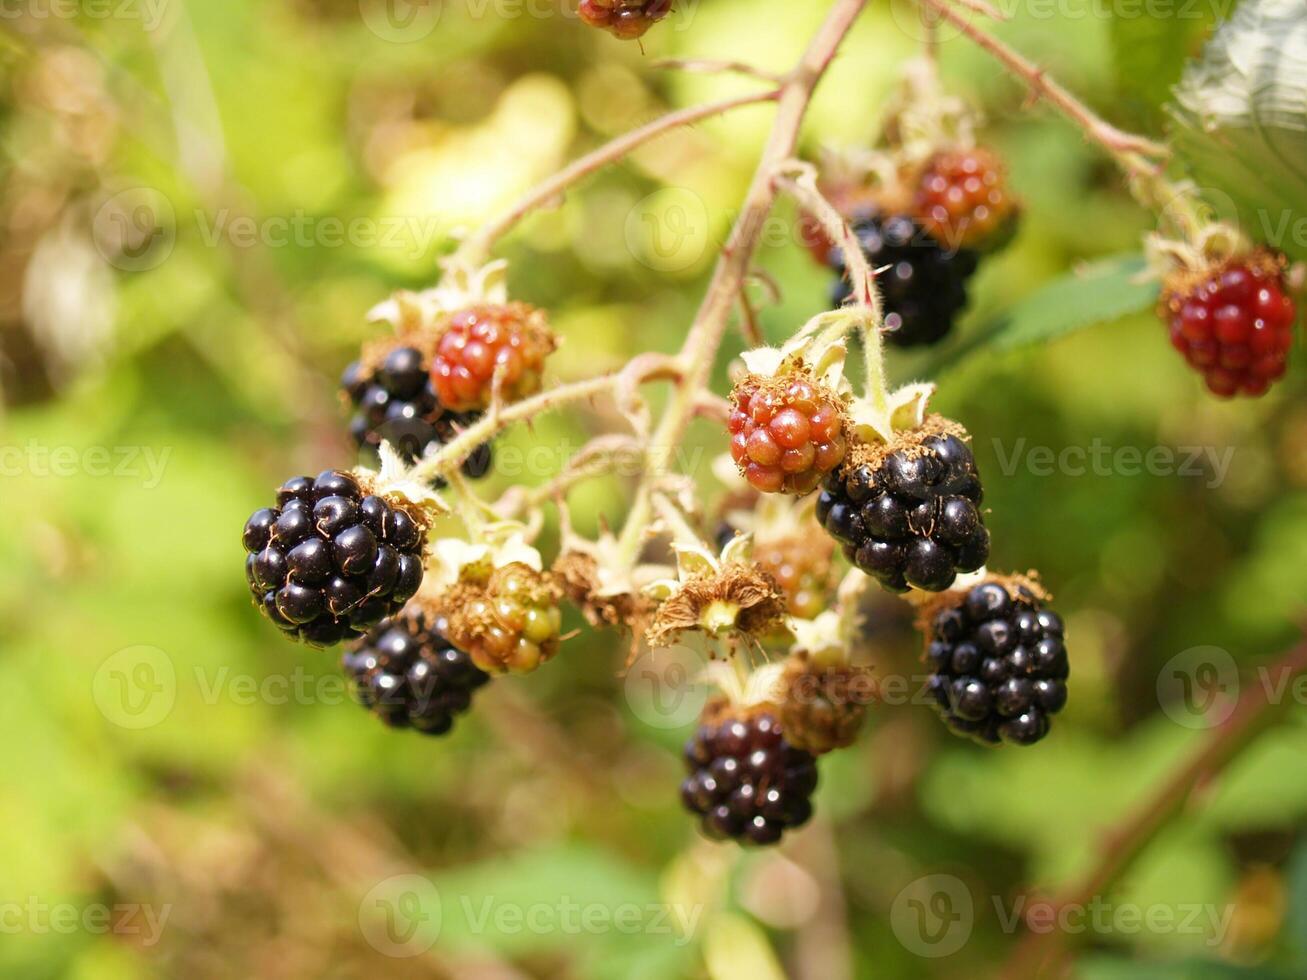 Wild Blackberries on the vine ripe and not photo